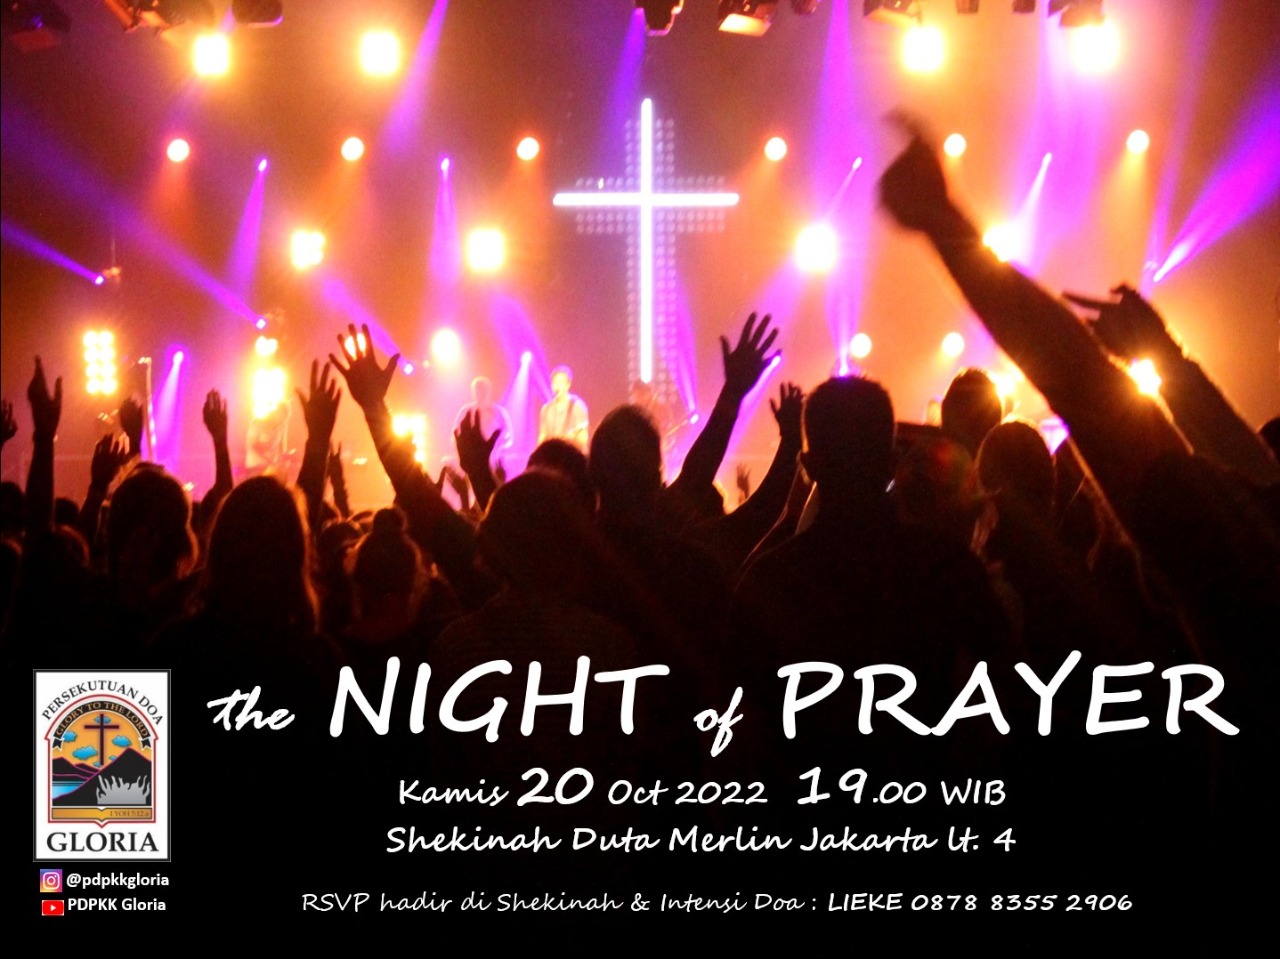 THE NIGHT OF PRAYER